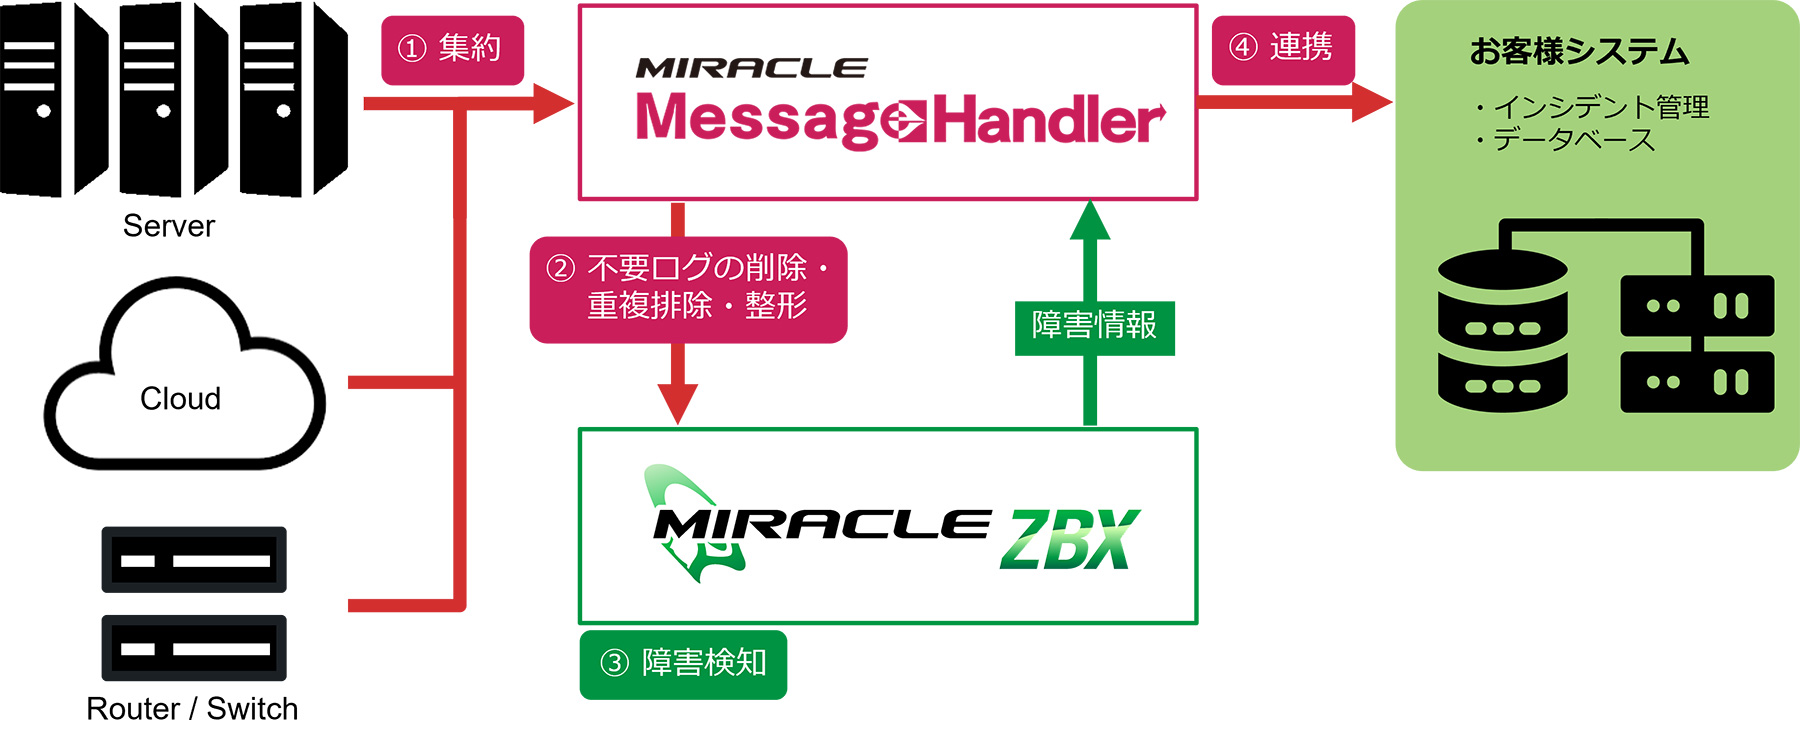 MIRACLE Message Handler